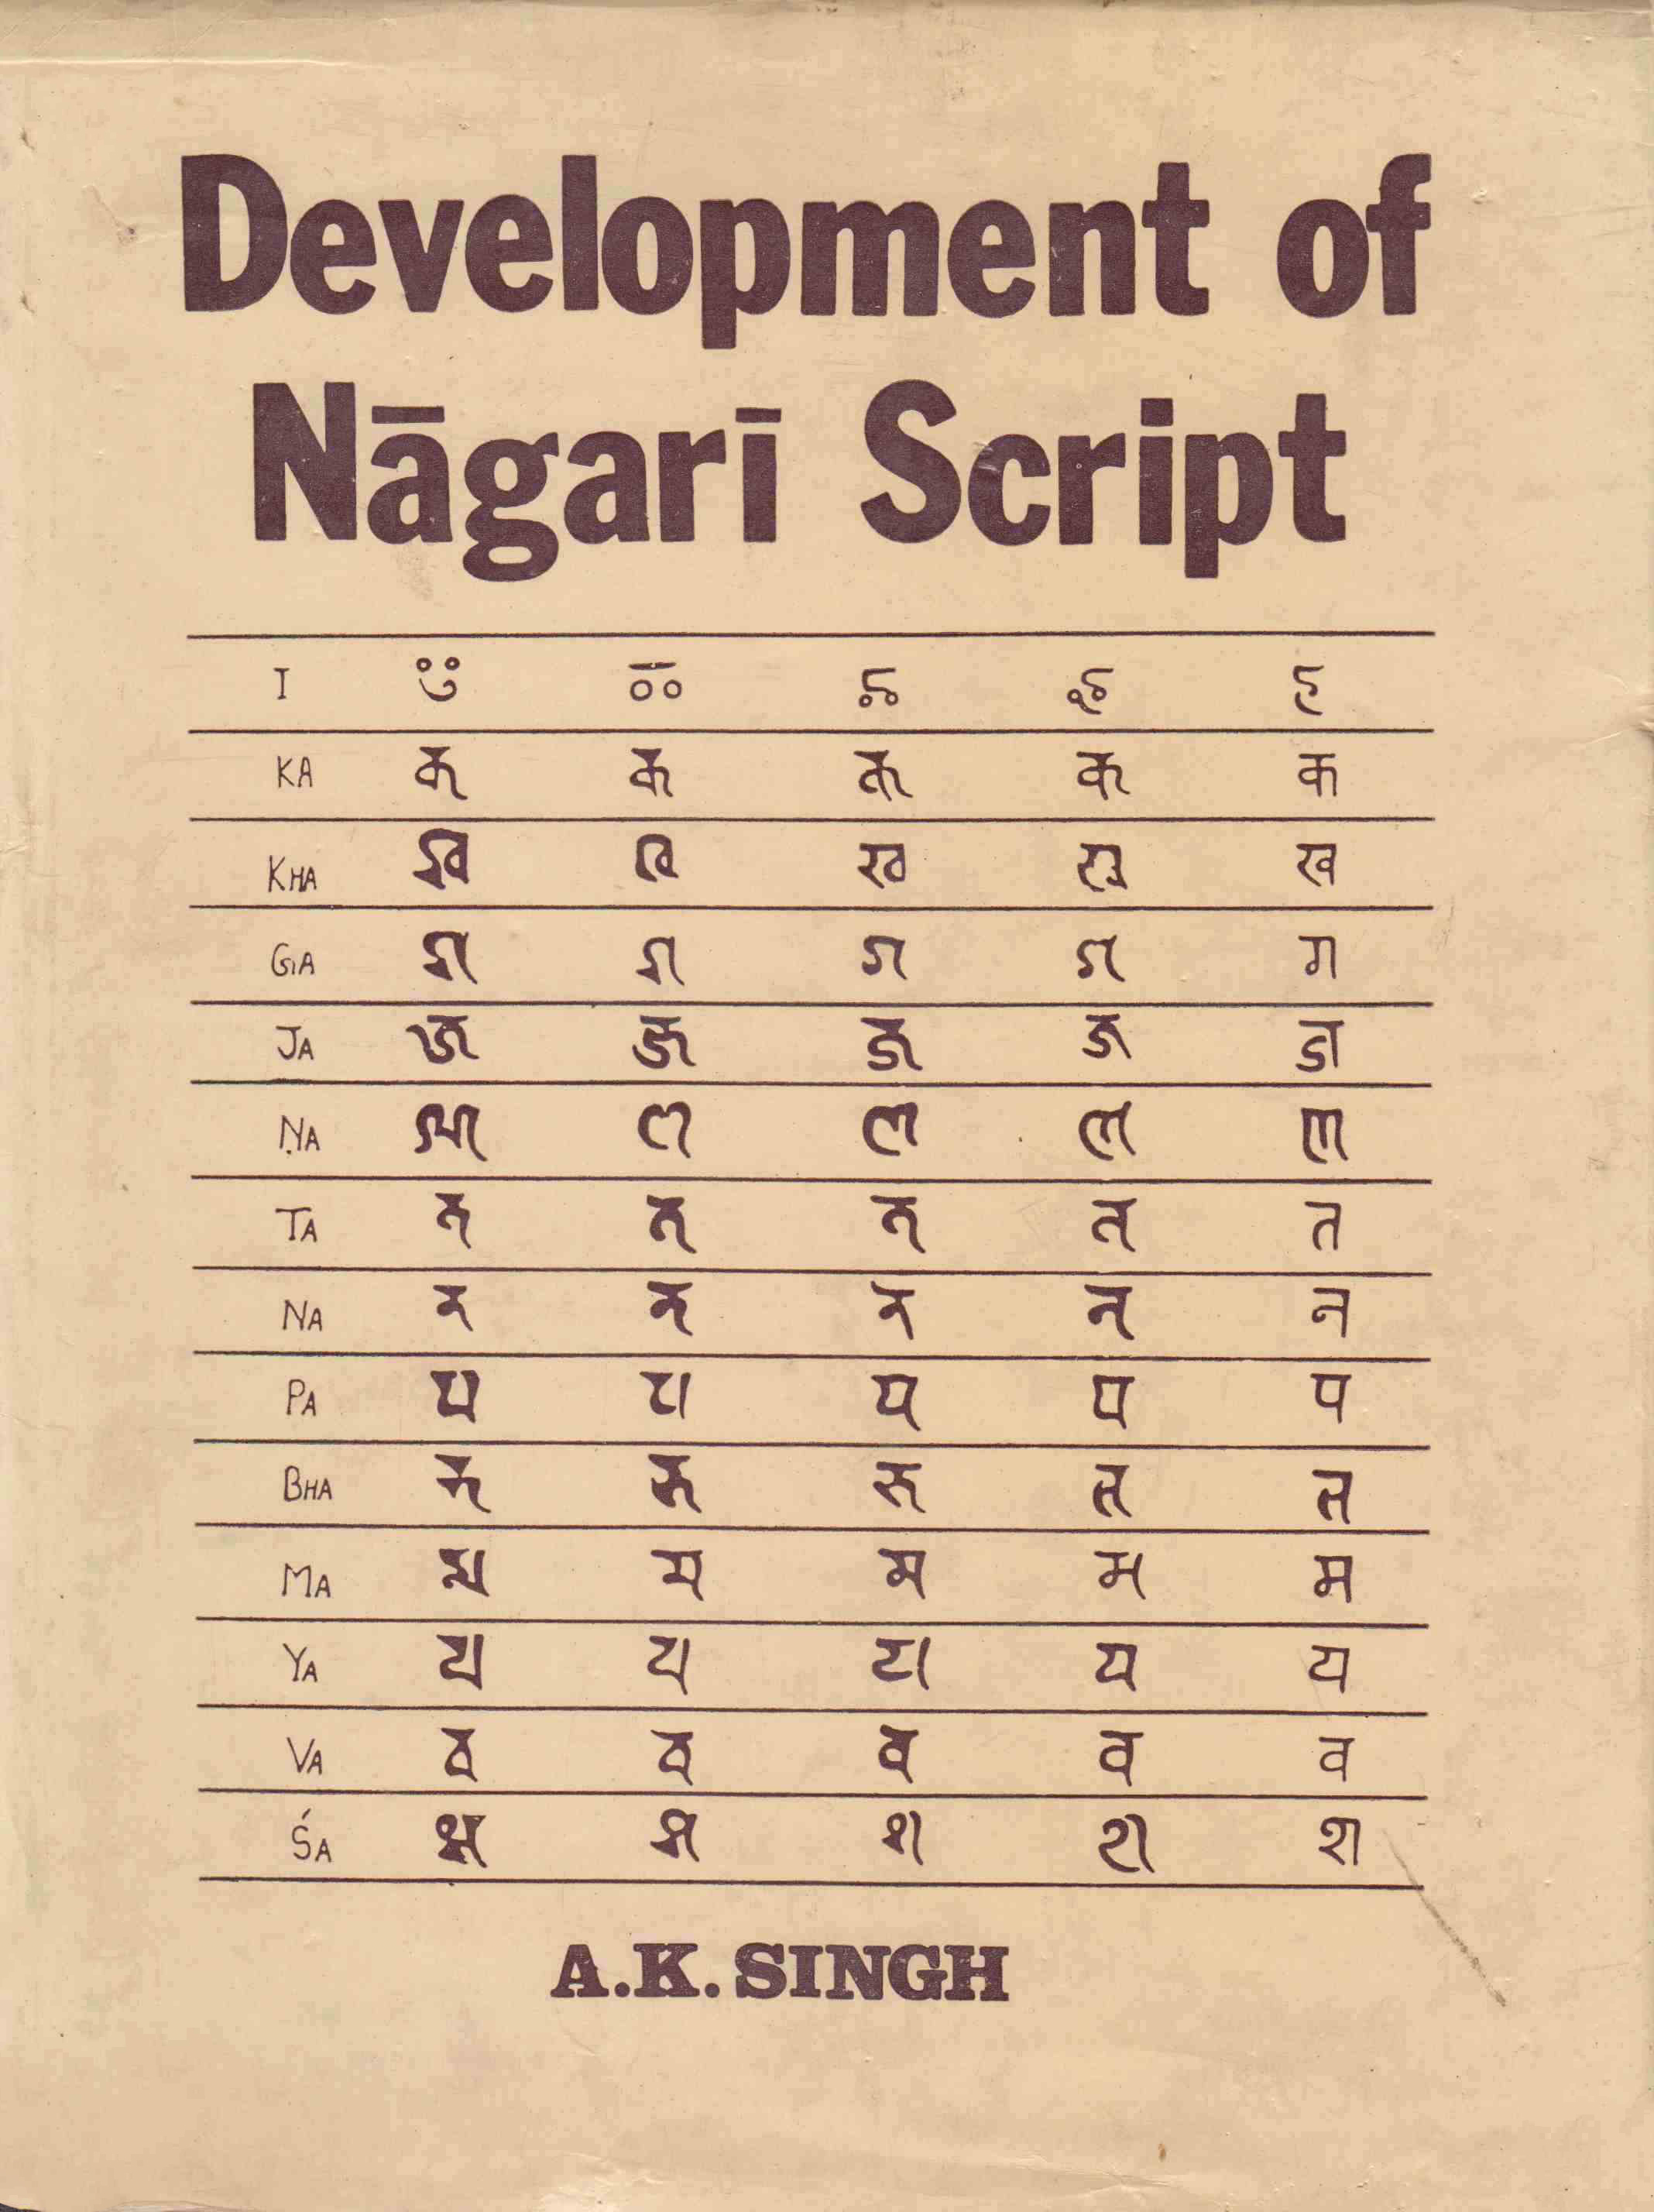 Development of Nagari Script